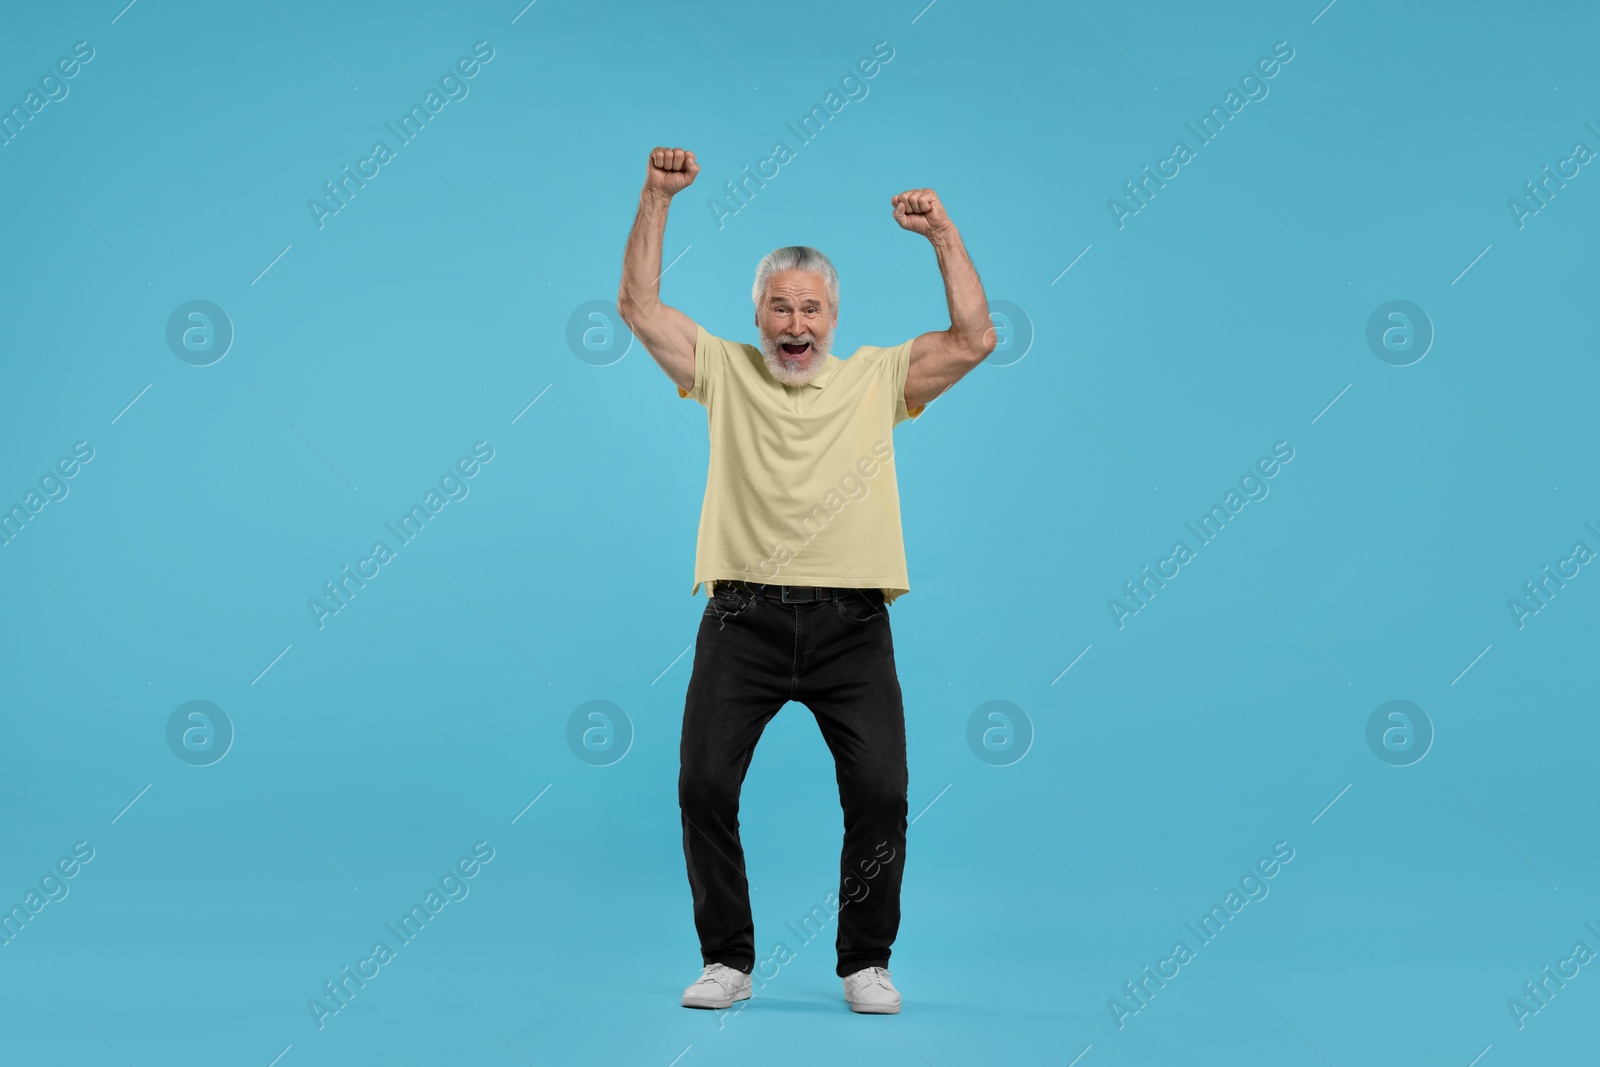 Photo of Emotional senior sports fan celebrating on light blue background